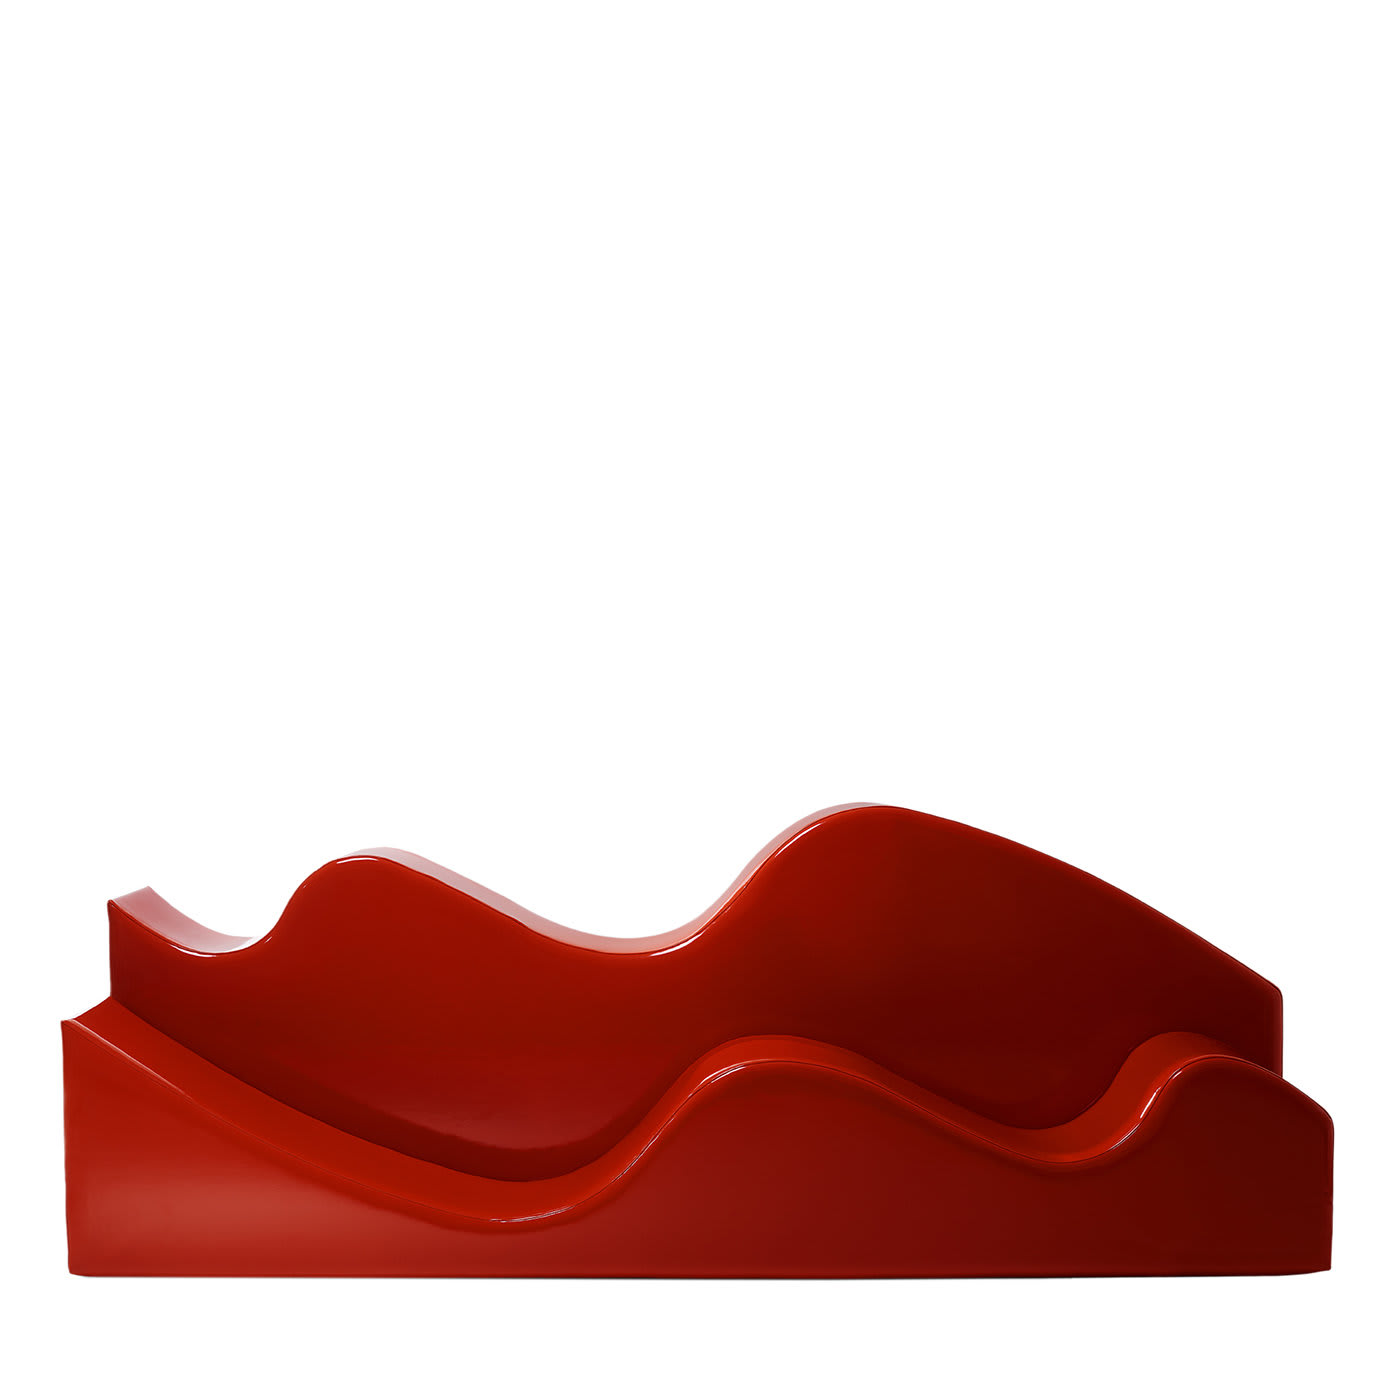 Superonda Red Sofa by Archizoom - Poltronova